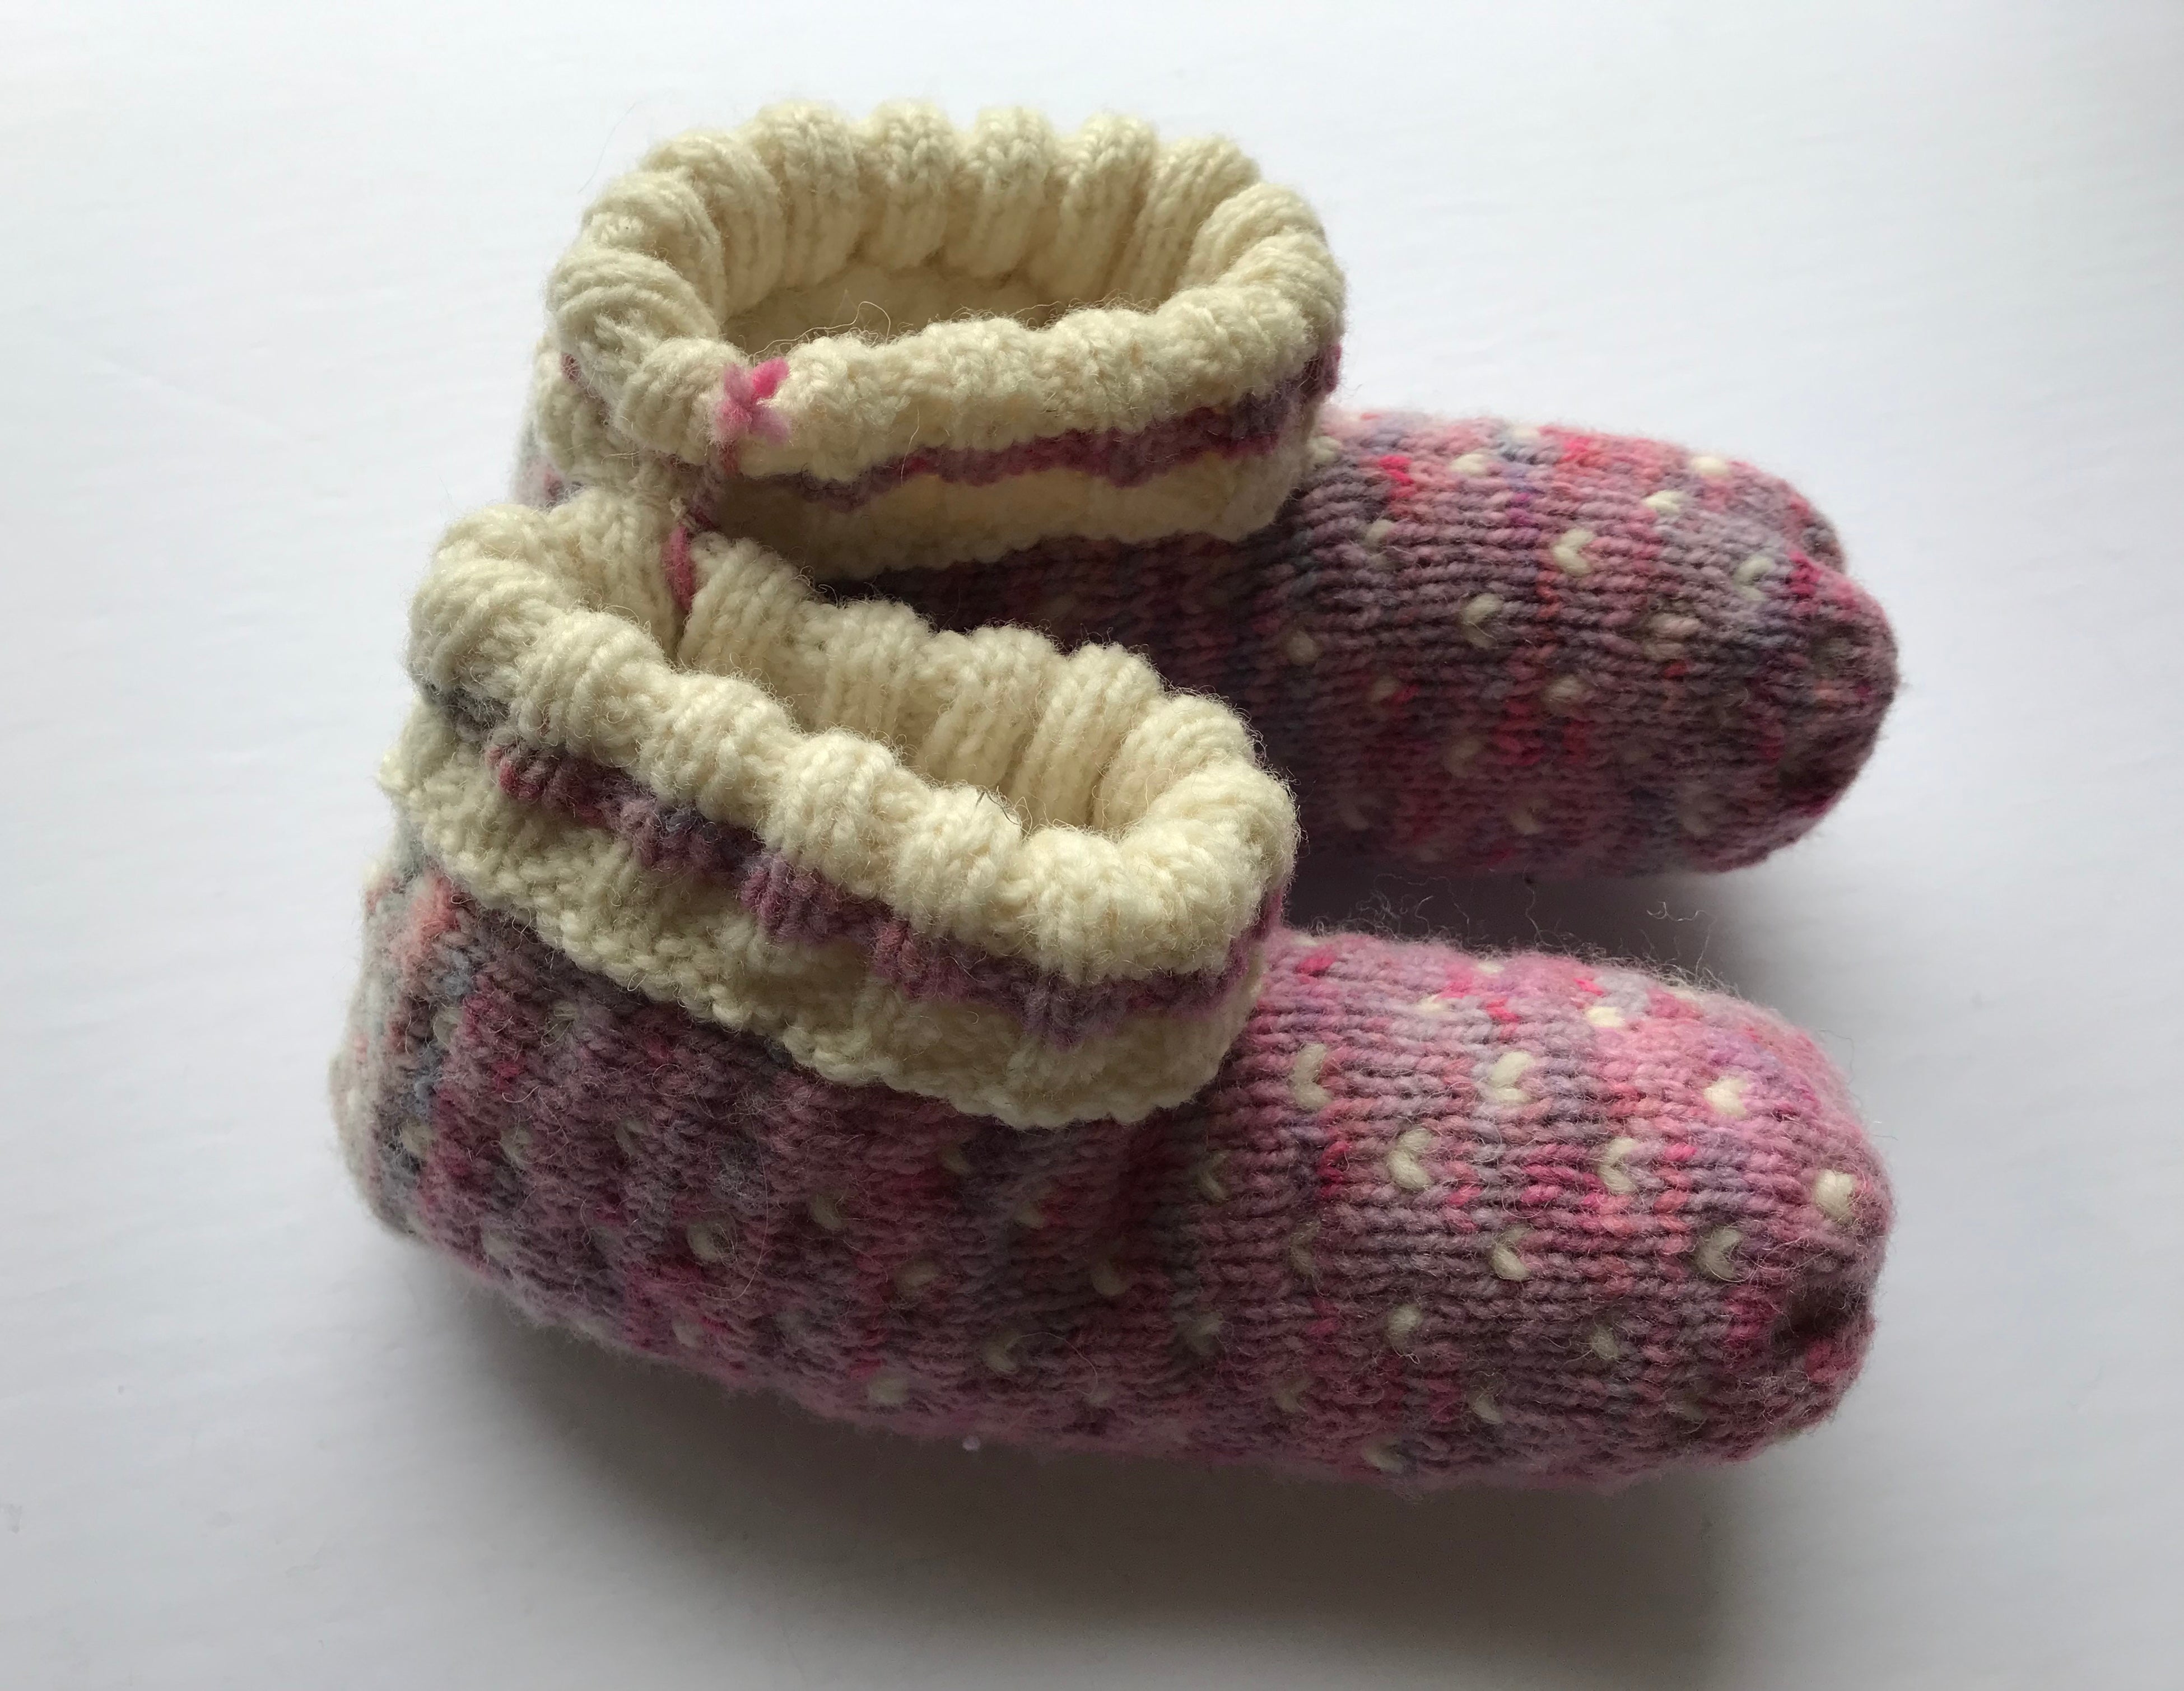 Thrummed Slippers Hand Dyed Yarn Ladies: 6.5-9.5